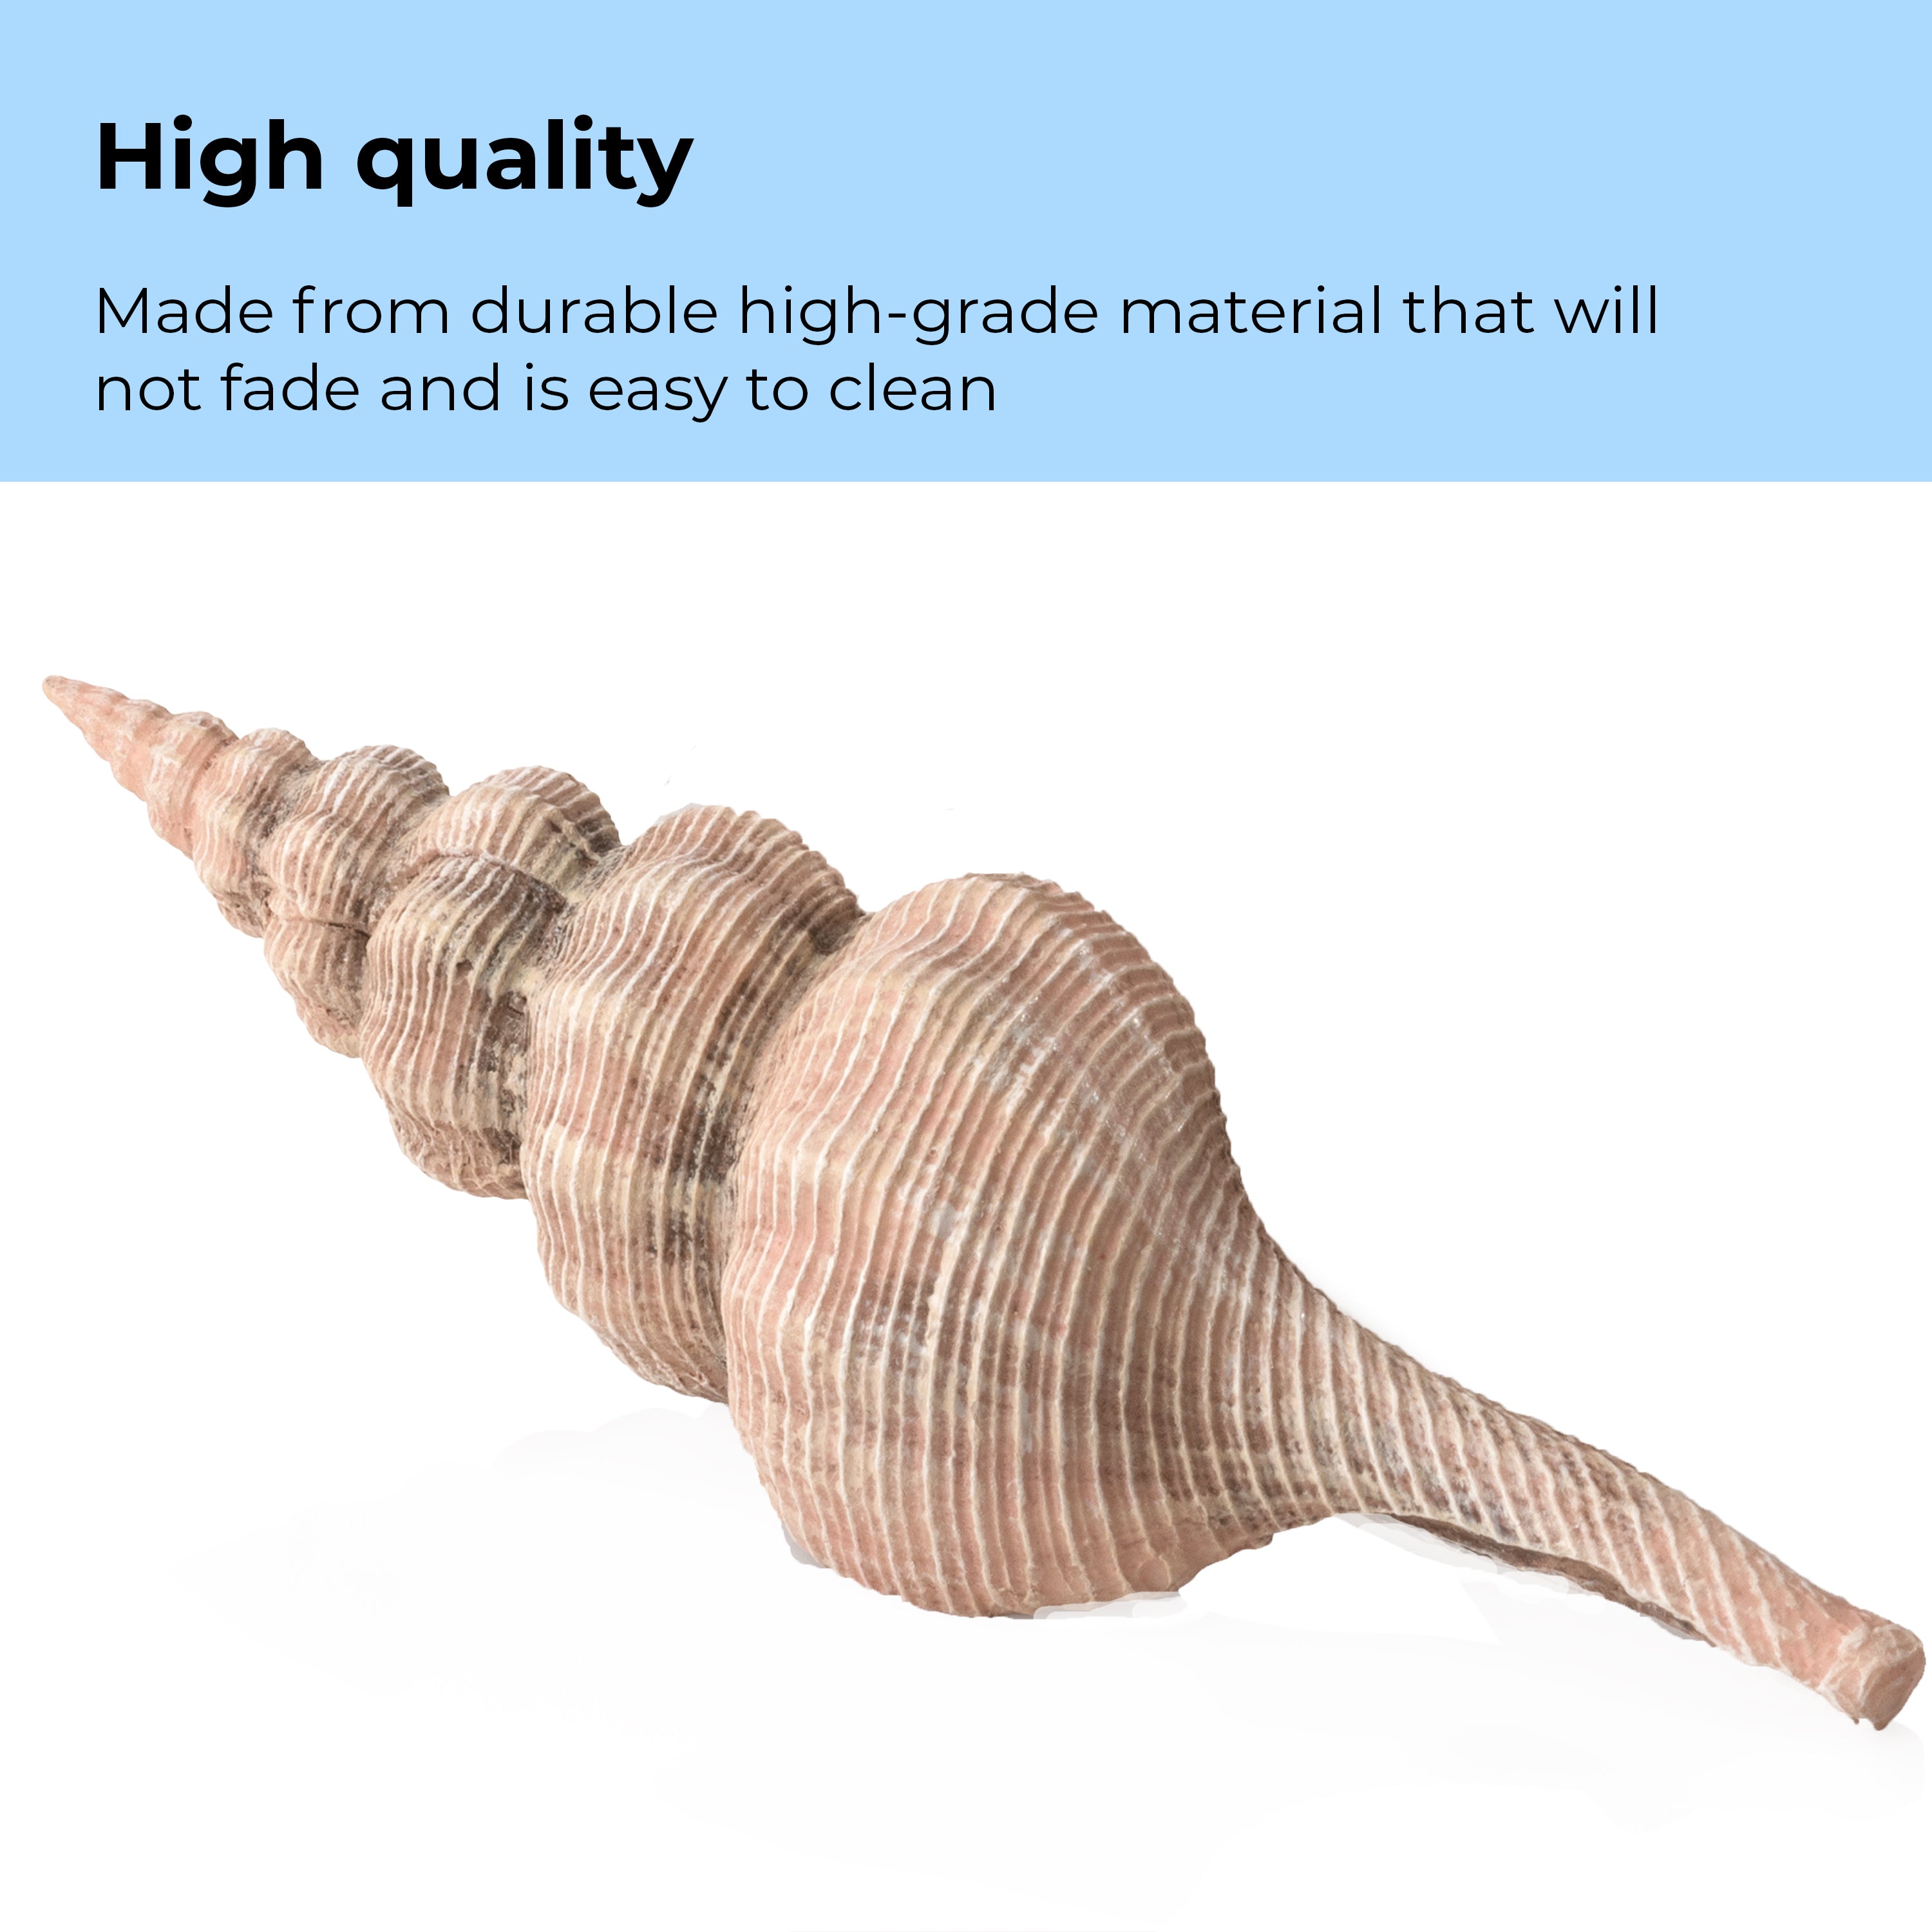 Sea Shell Set - High quality